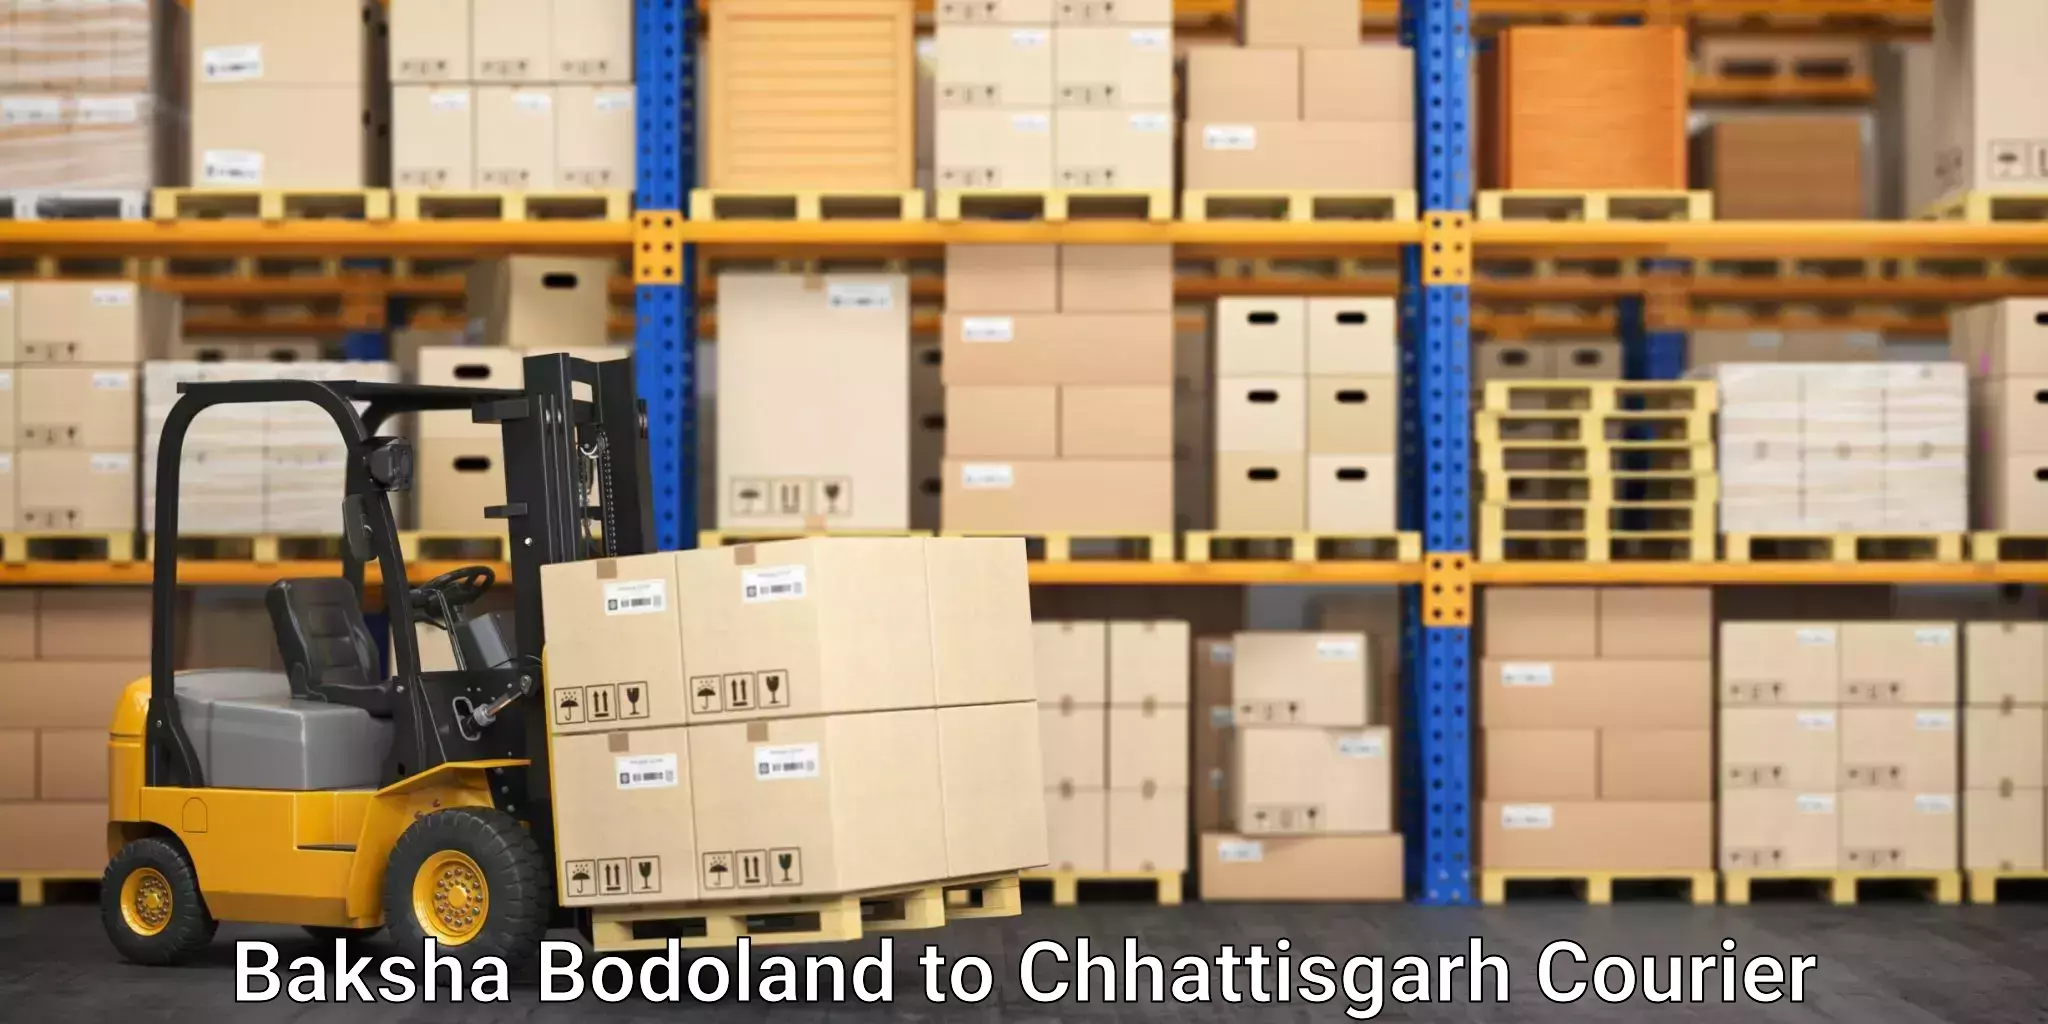 Automated shipping in Baksha Bodoland to Raipur